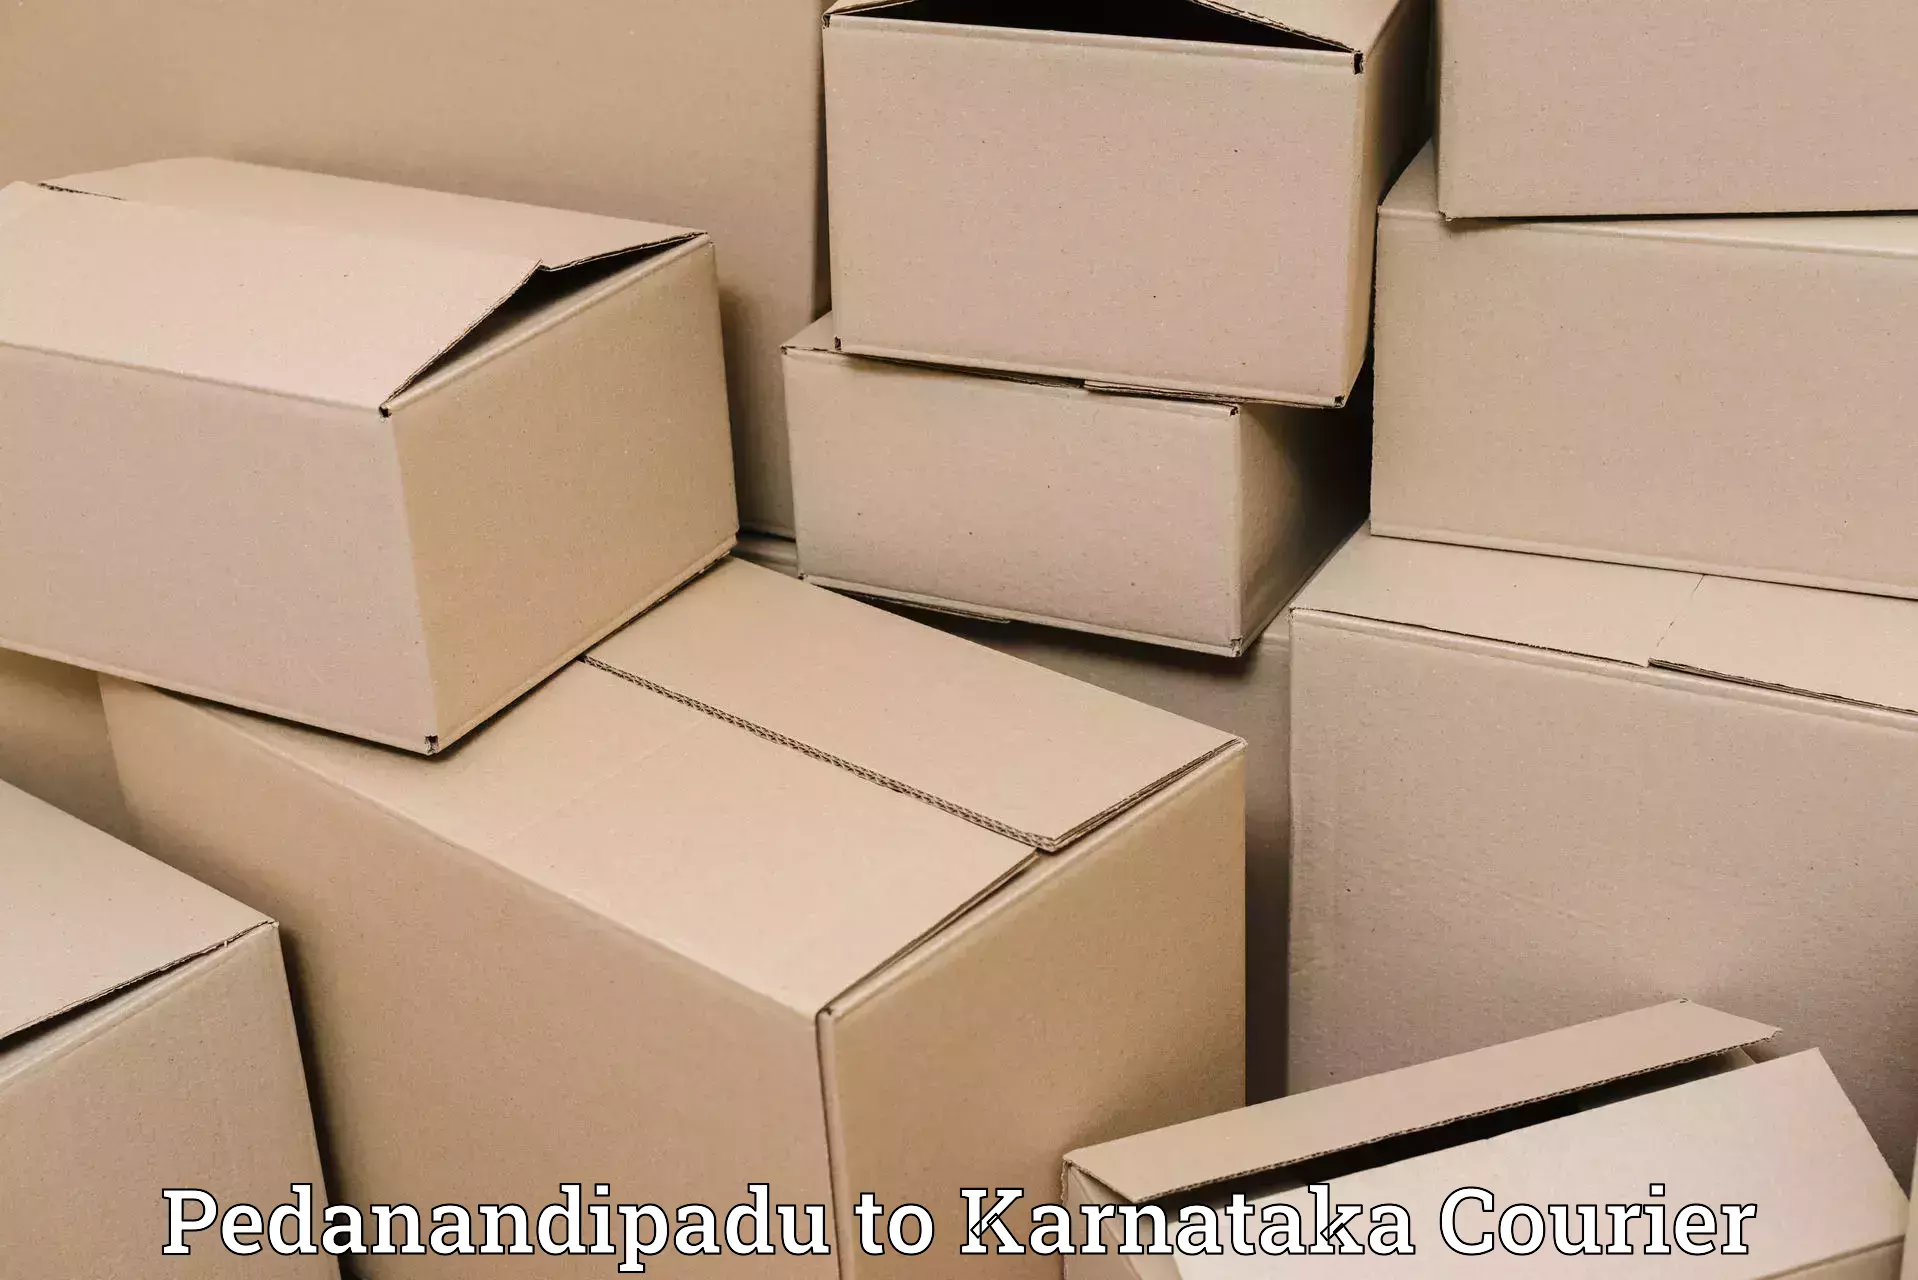 State-of-the-art courier technology Pedanandipadu to Maddur